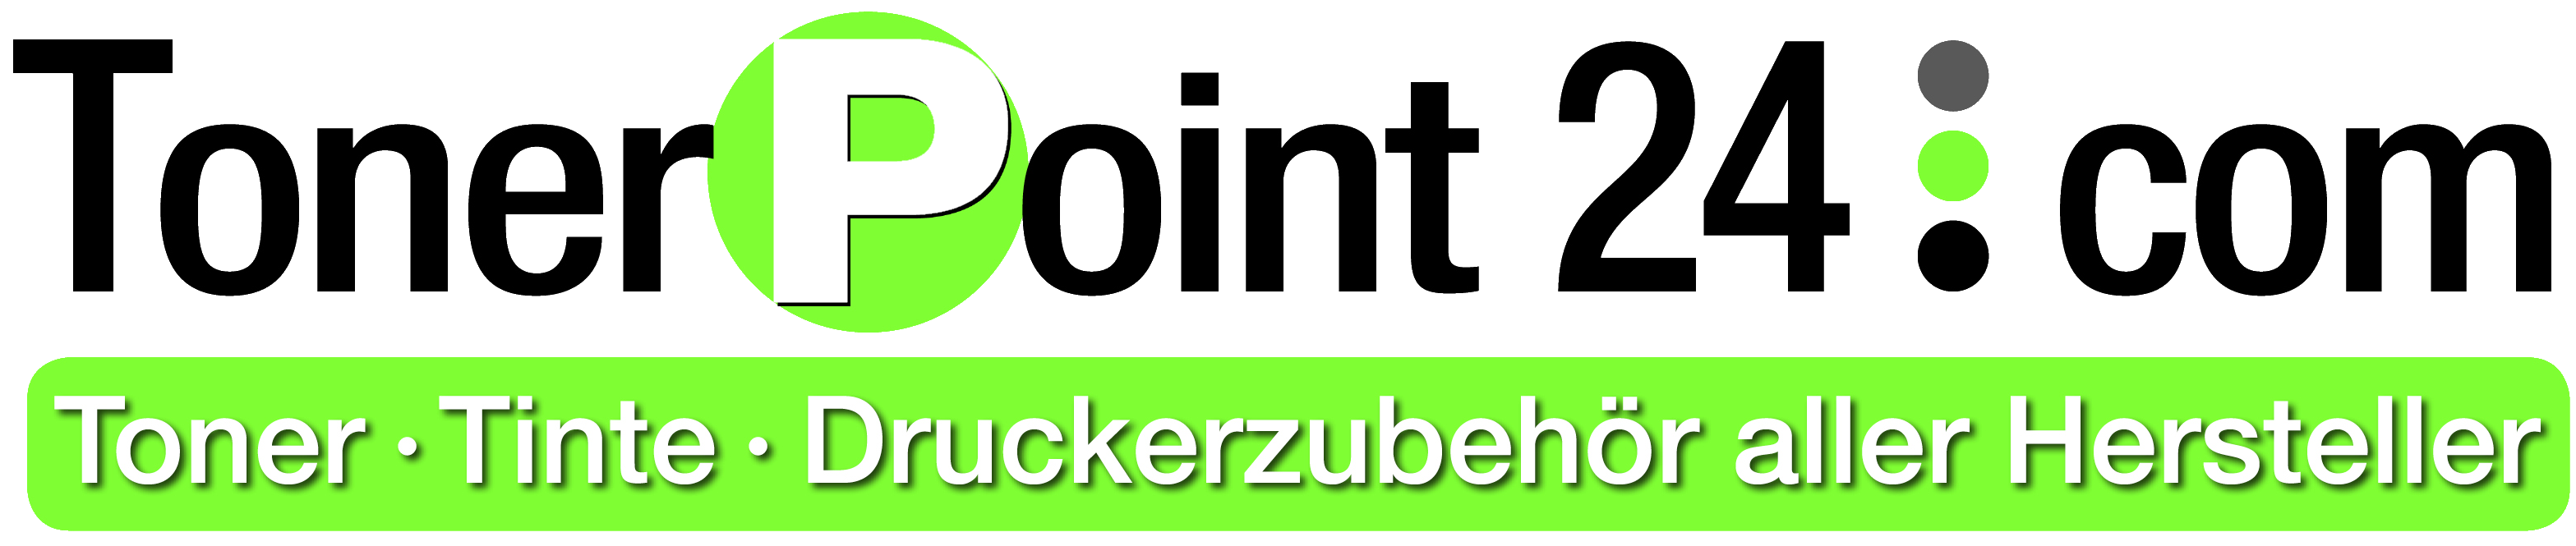 TonerPoint24.com in Nürnberg